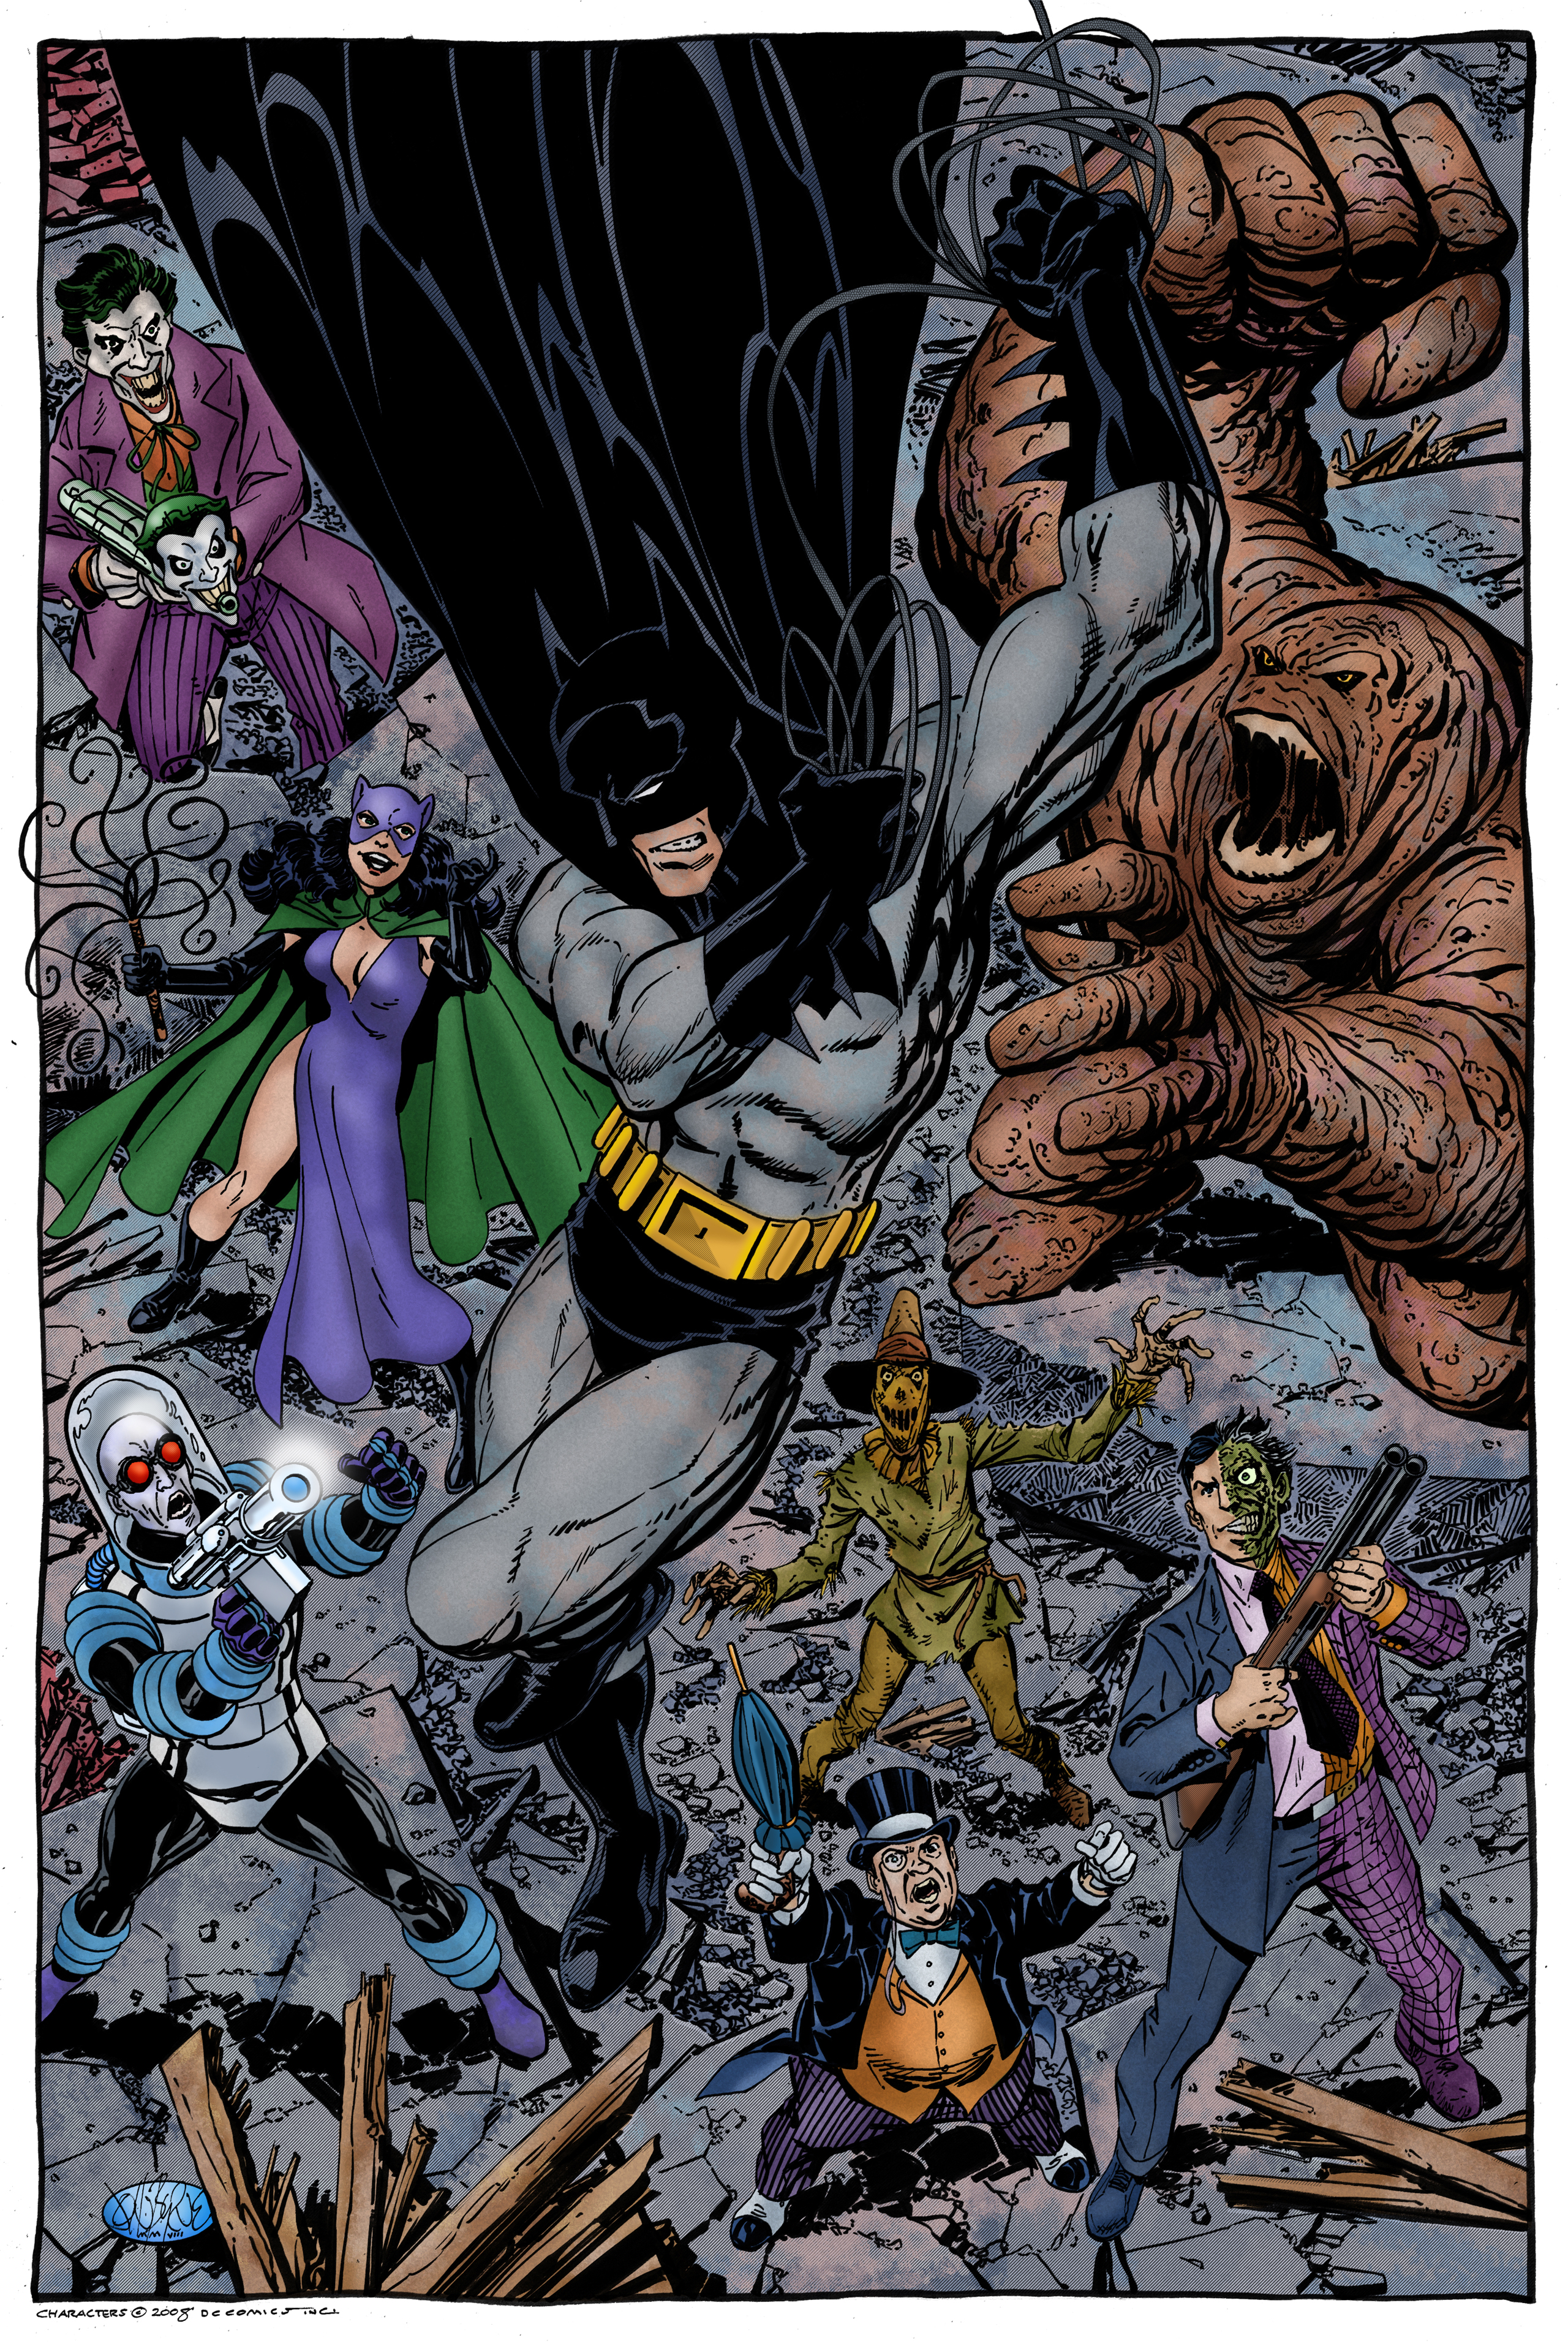 Batman vs. Rogues Gallery (John Byrne) by xts33 on DeviantArt